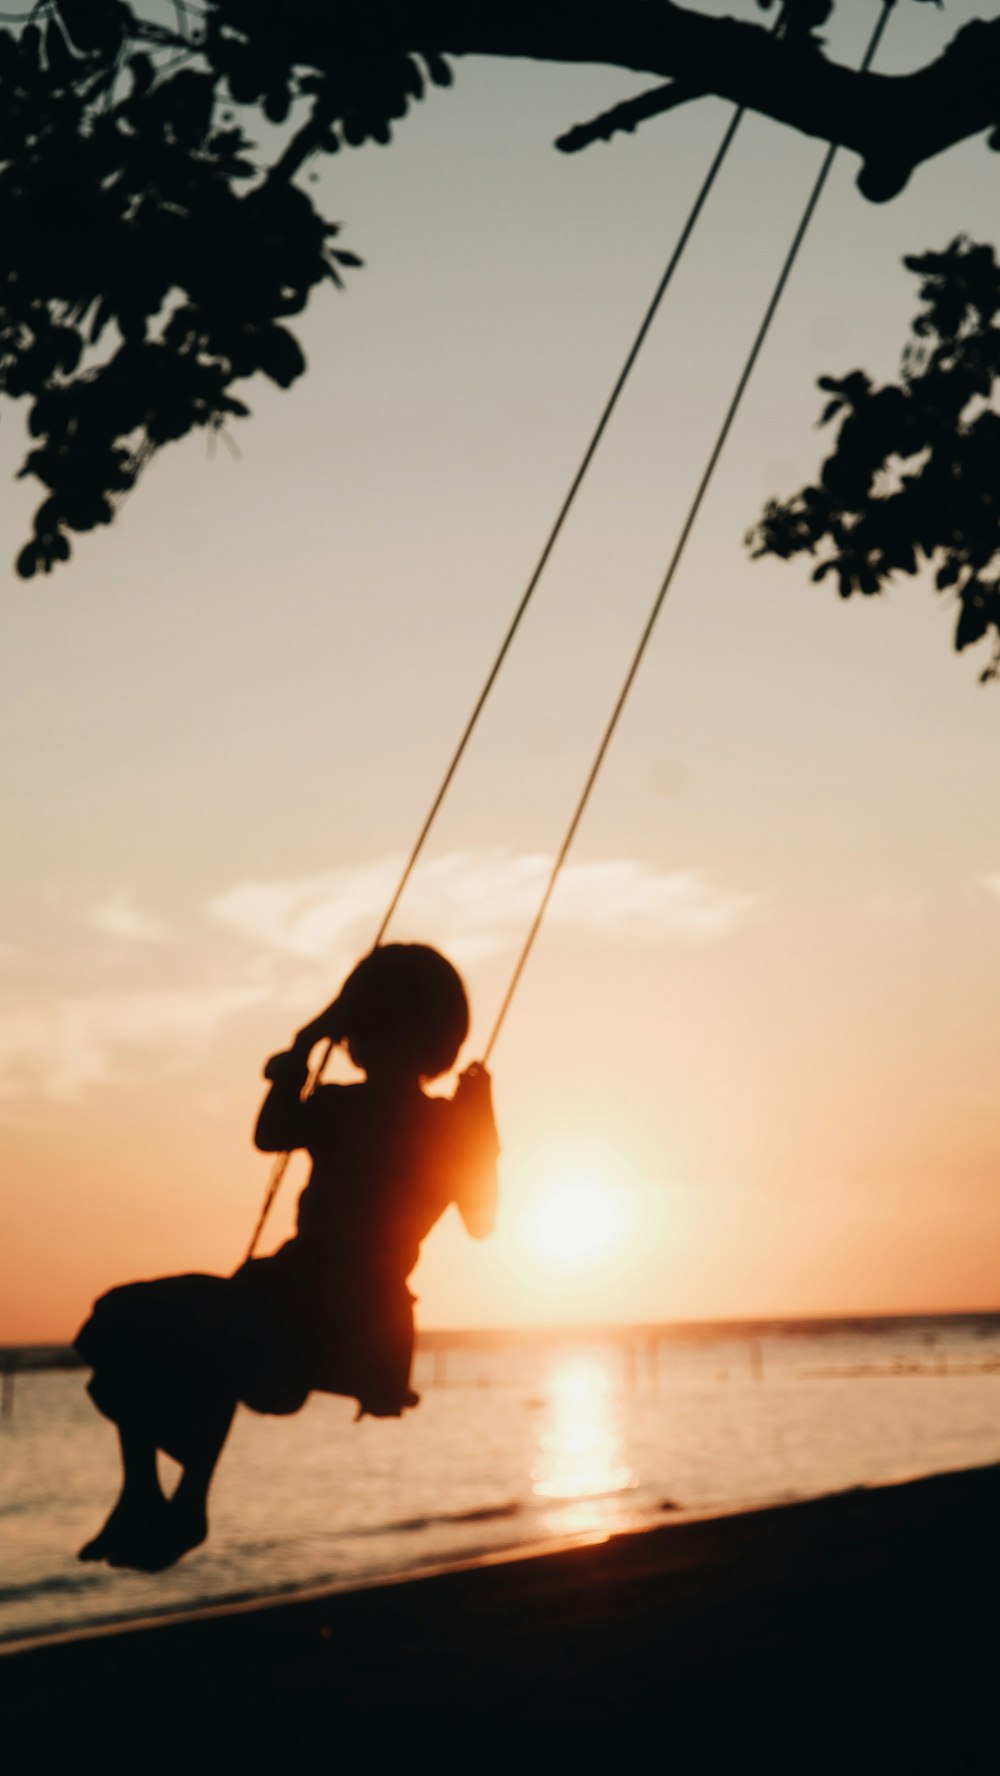 silhouette of girl on swing across body of water